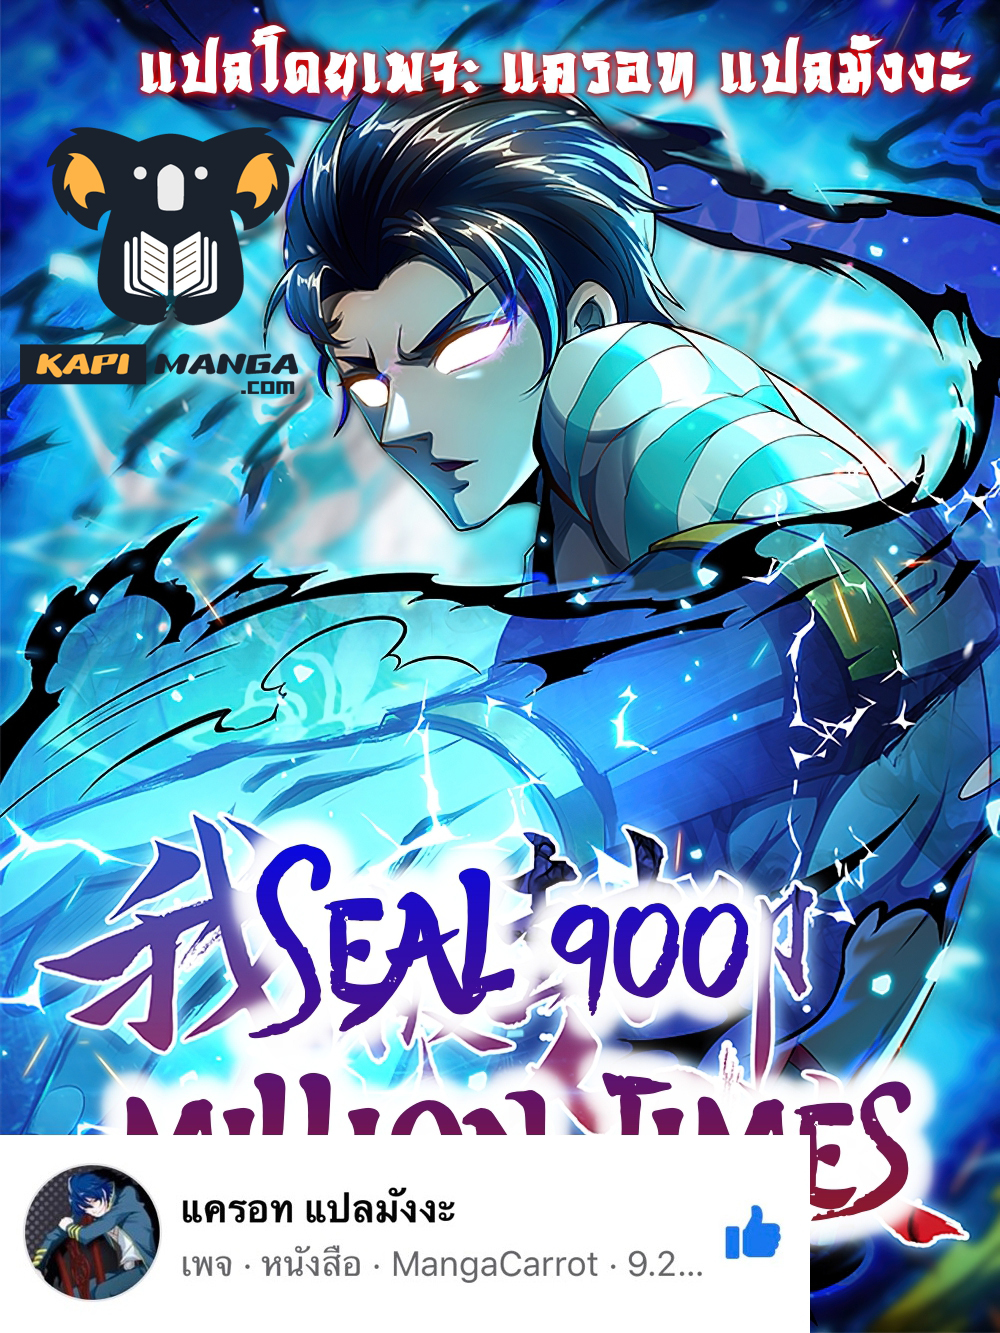 Seal 900 Million Times 23 (1)